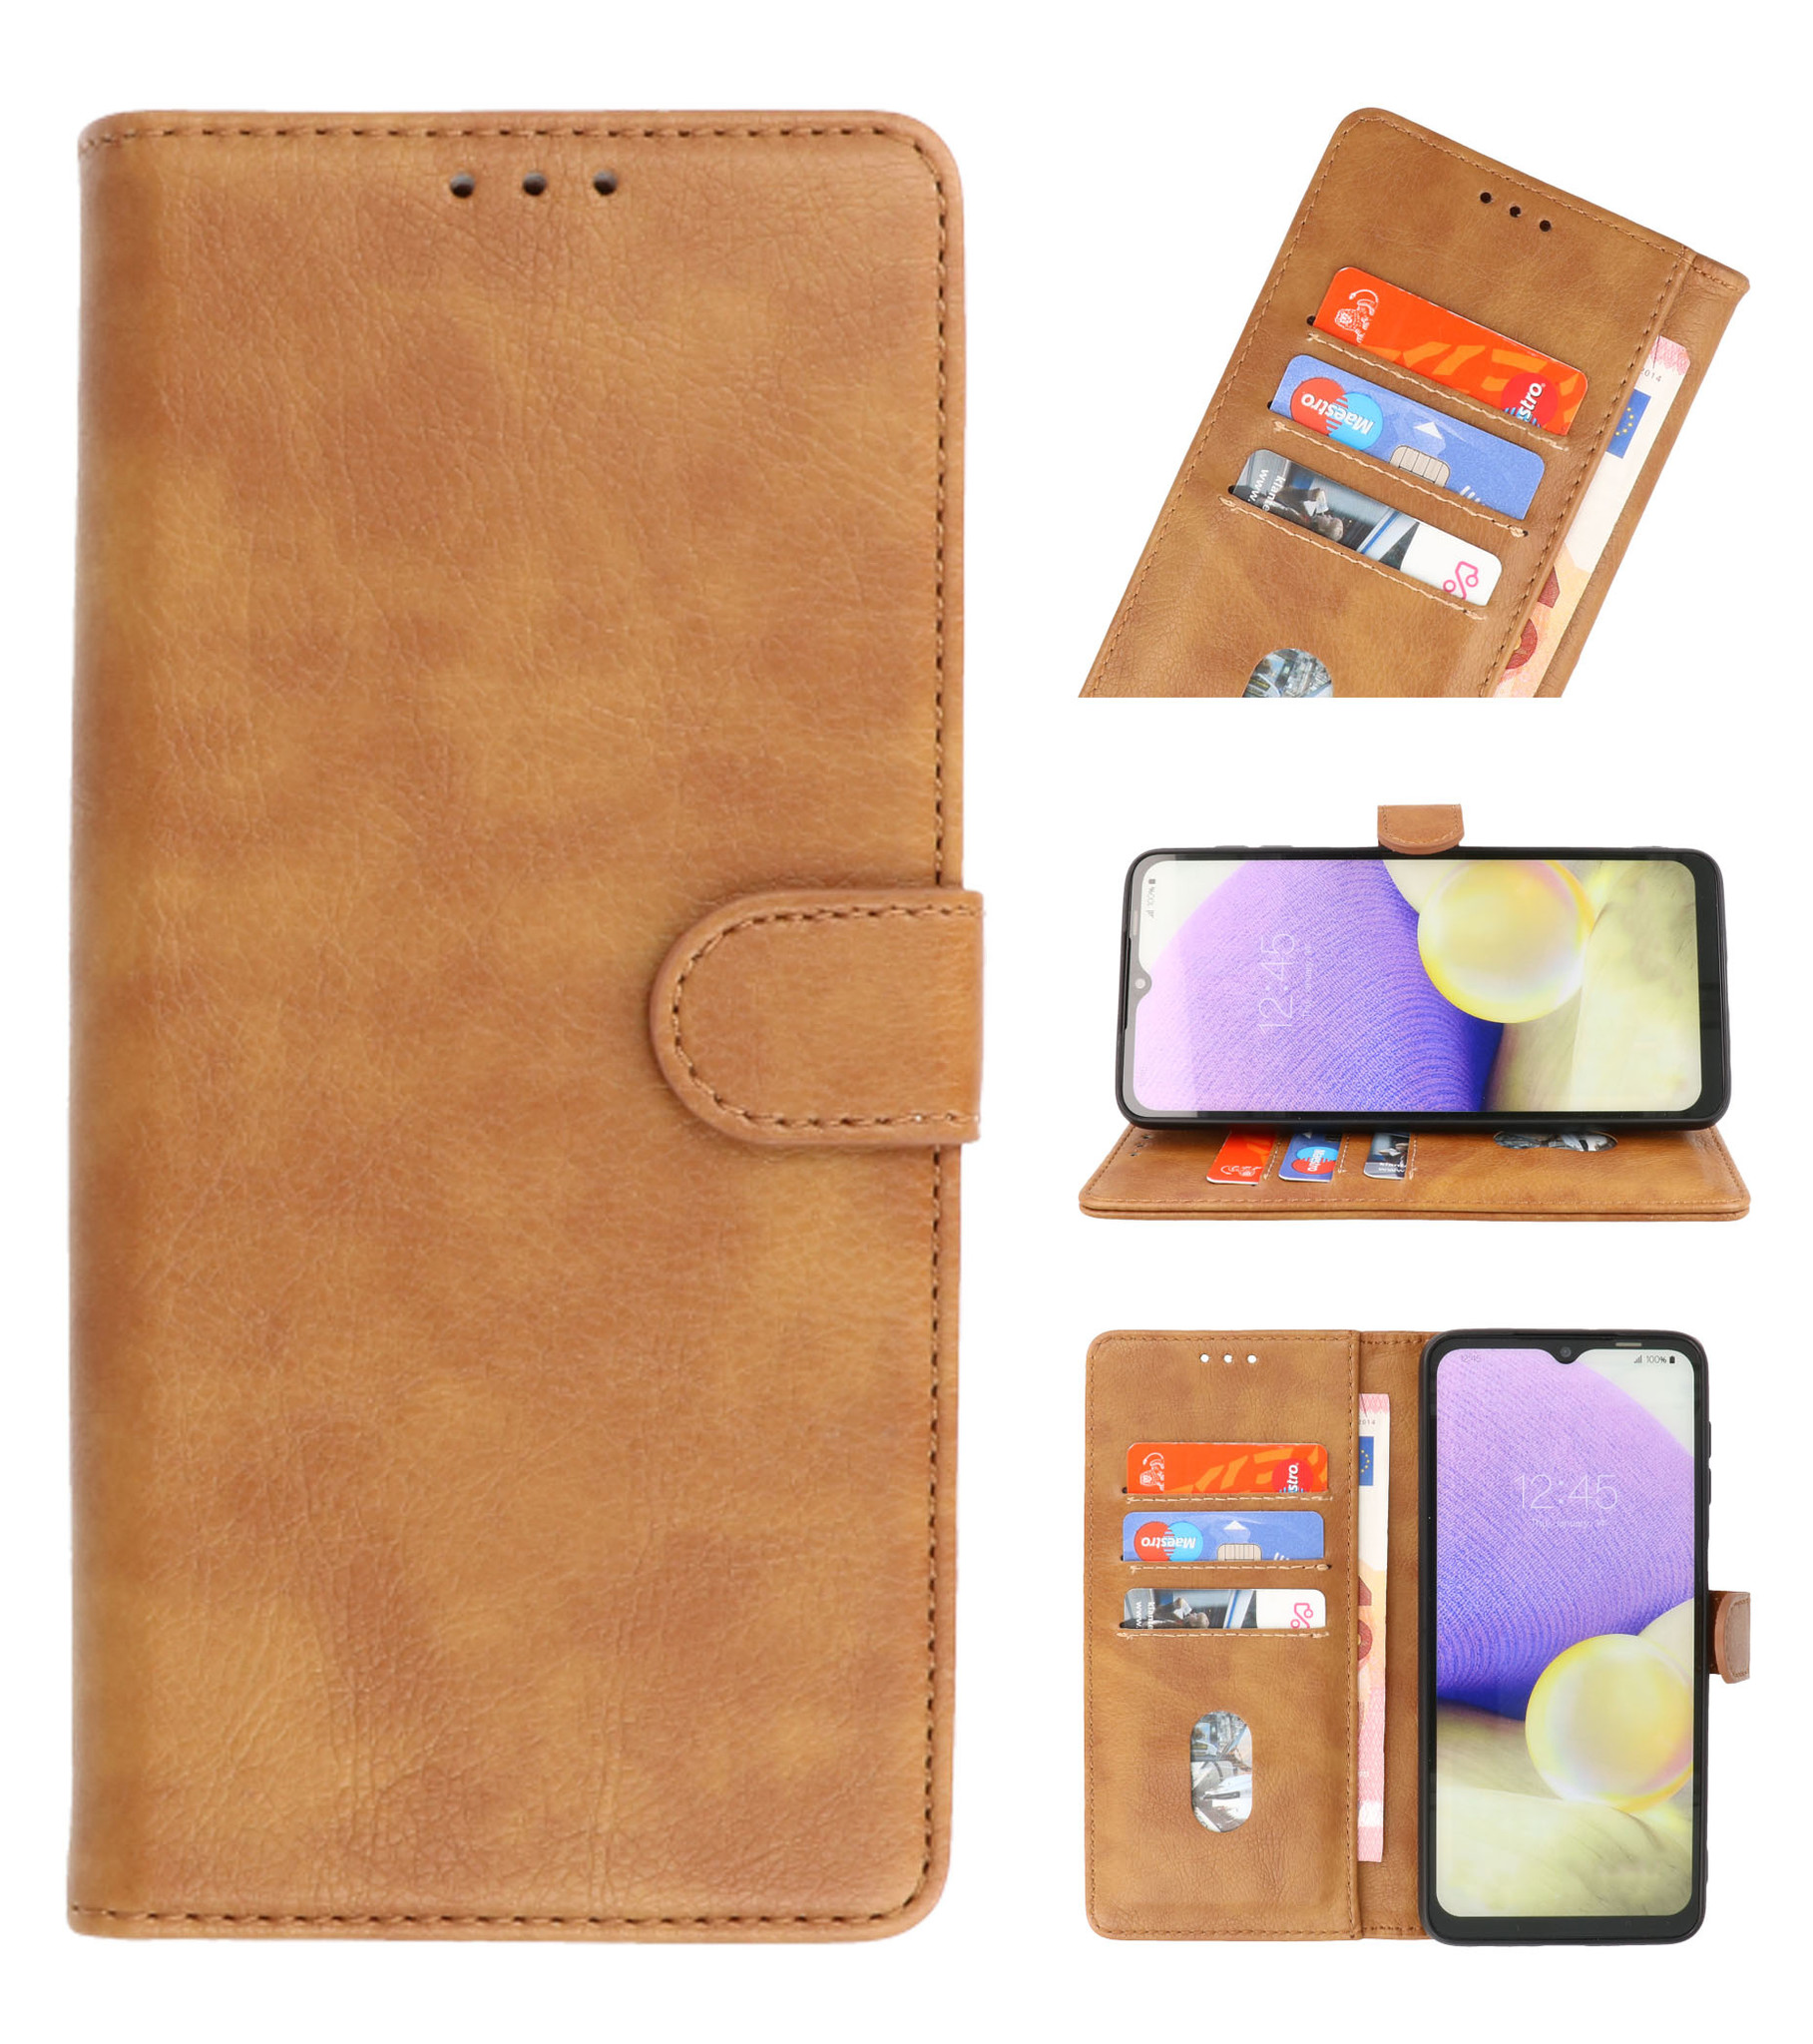 Etuis portefeuille Bookstyle Case pour Samsung Galaxy A50 Brown